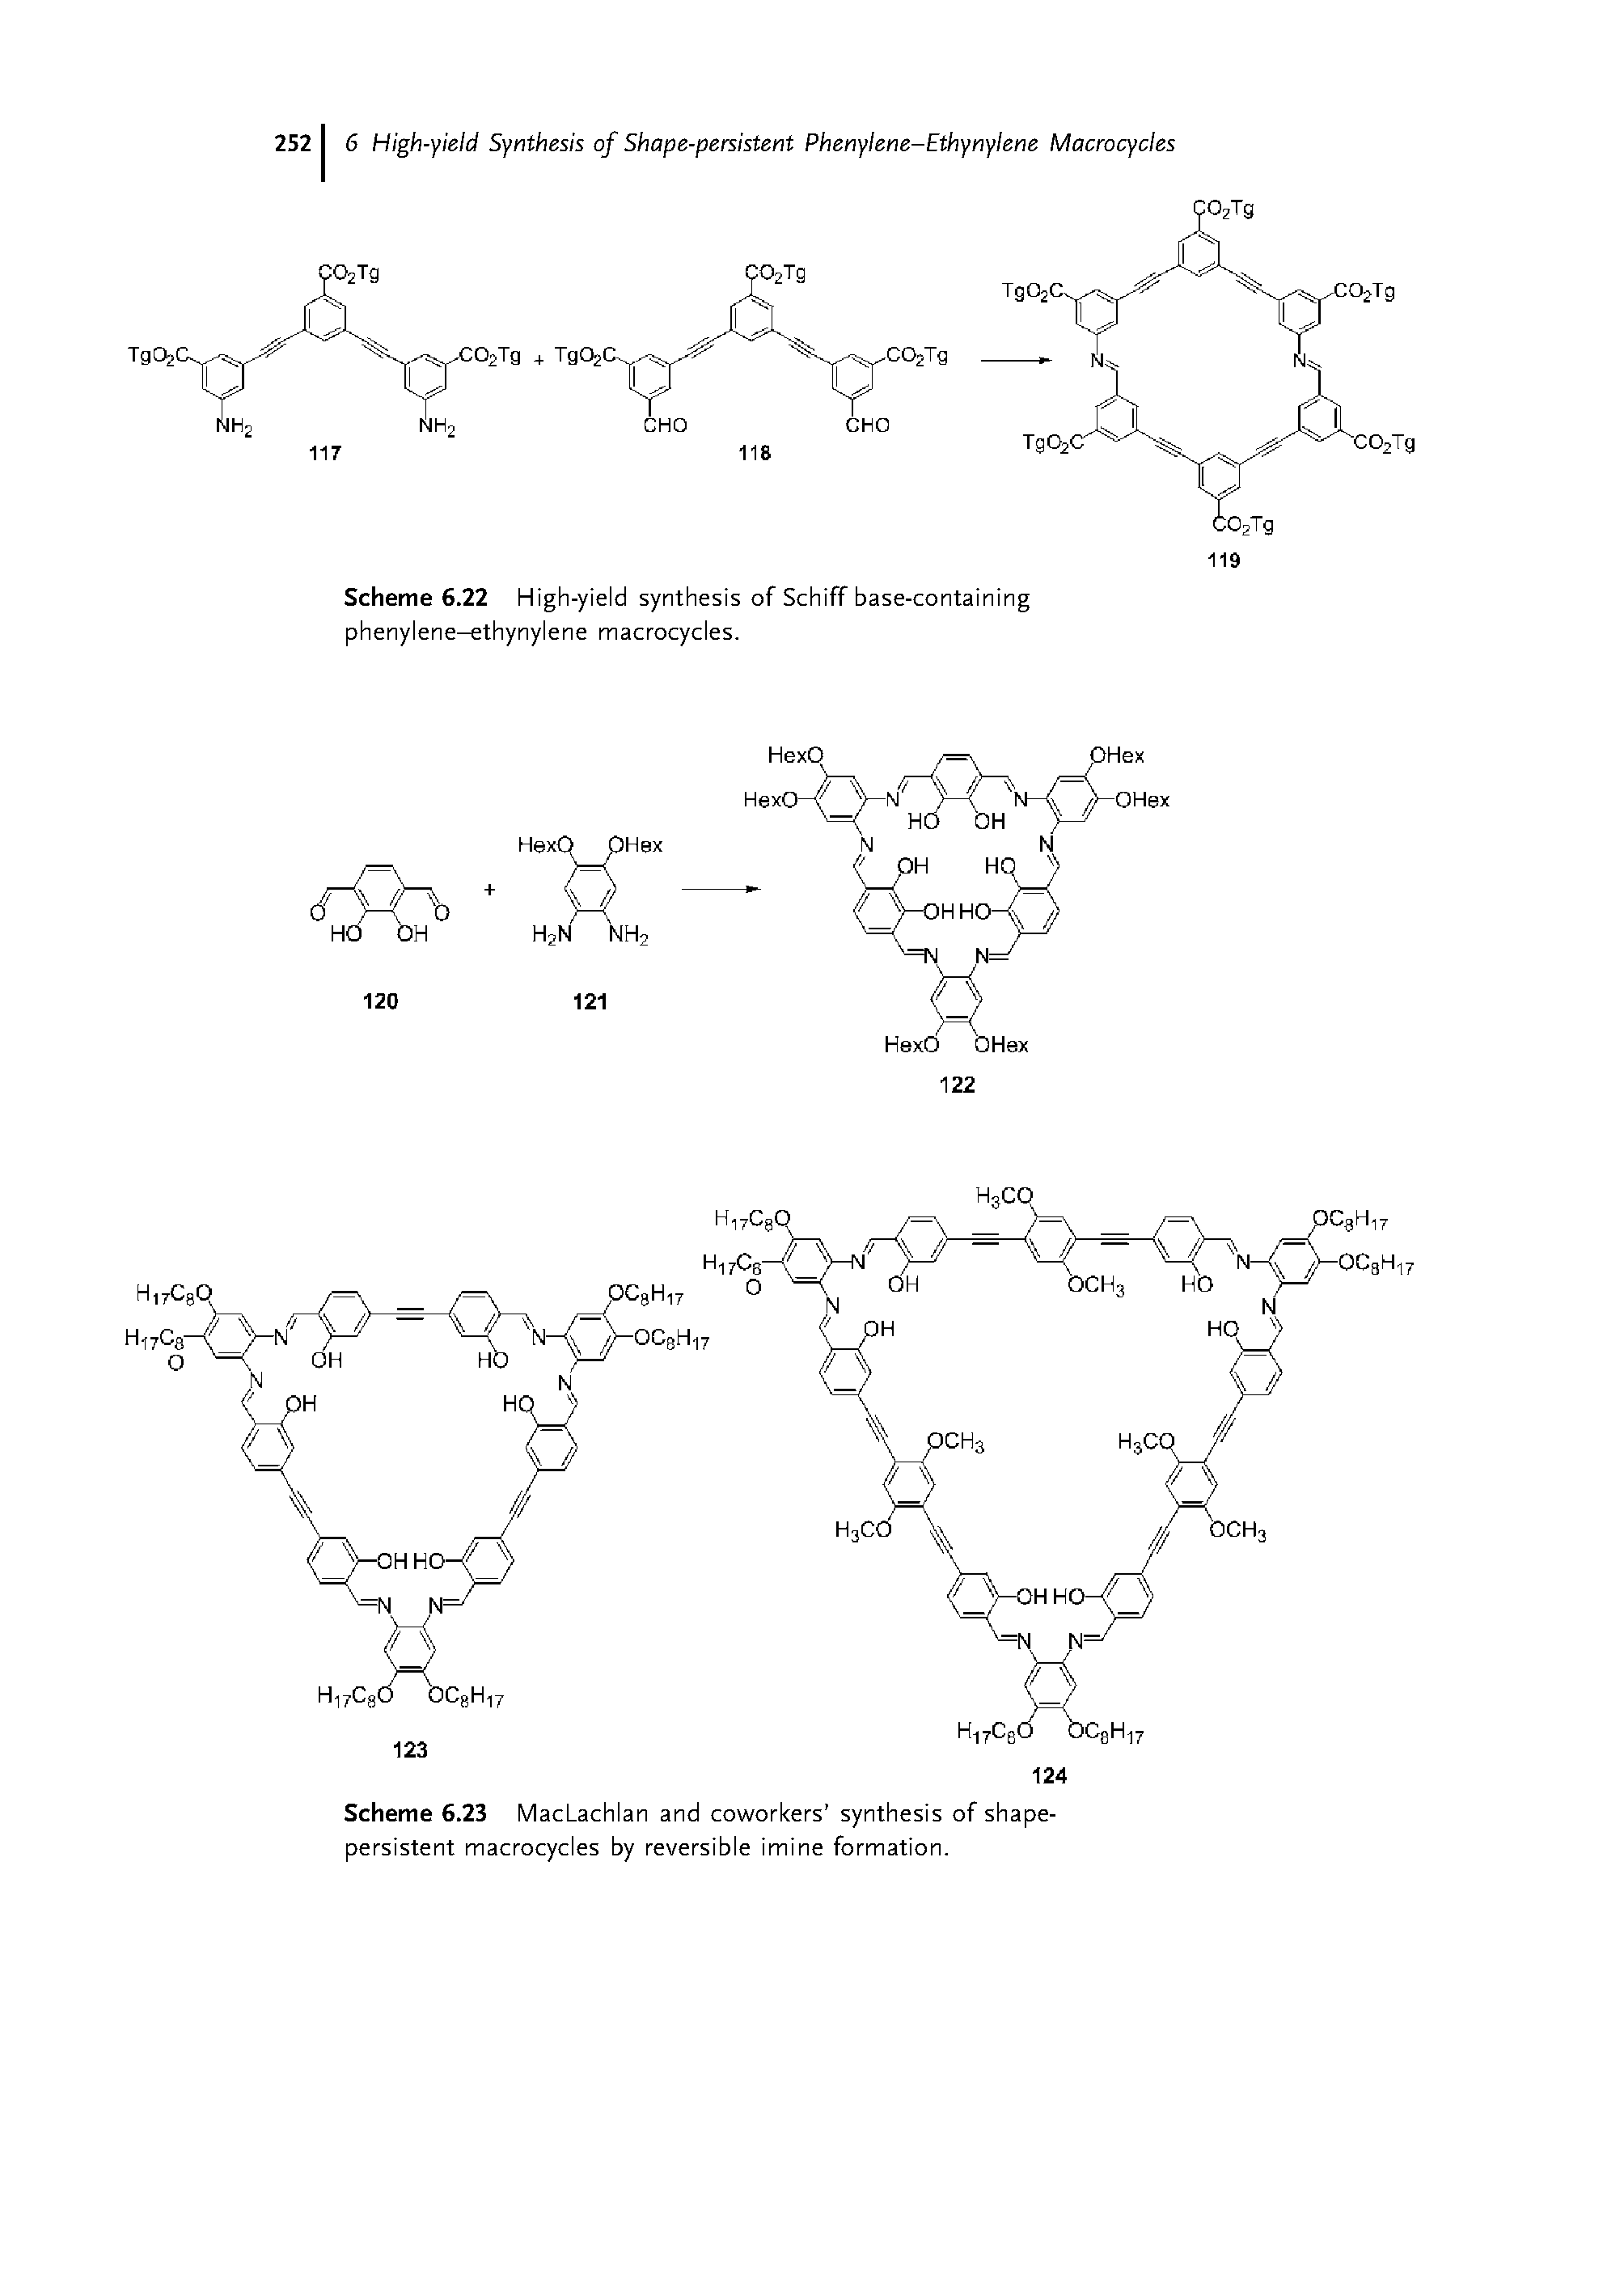 Scheme 6.22 High-yield synthesis of Schiff base-containing phenylene-ethynylene macrocycles.